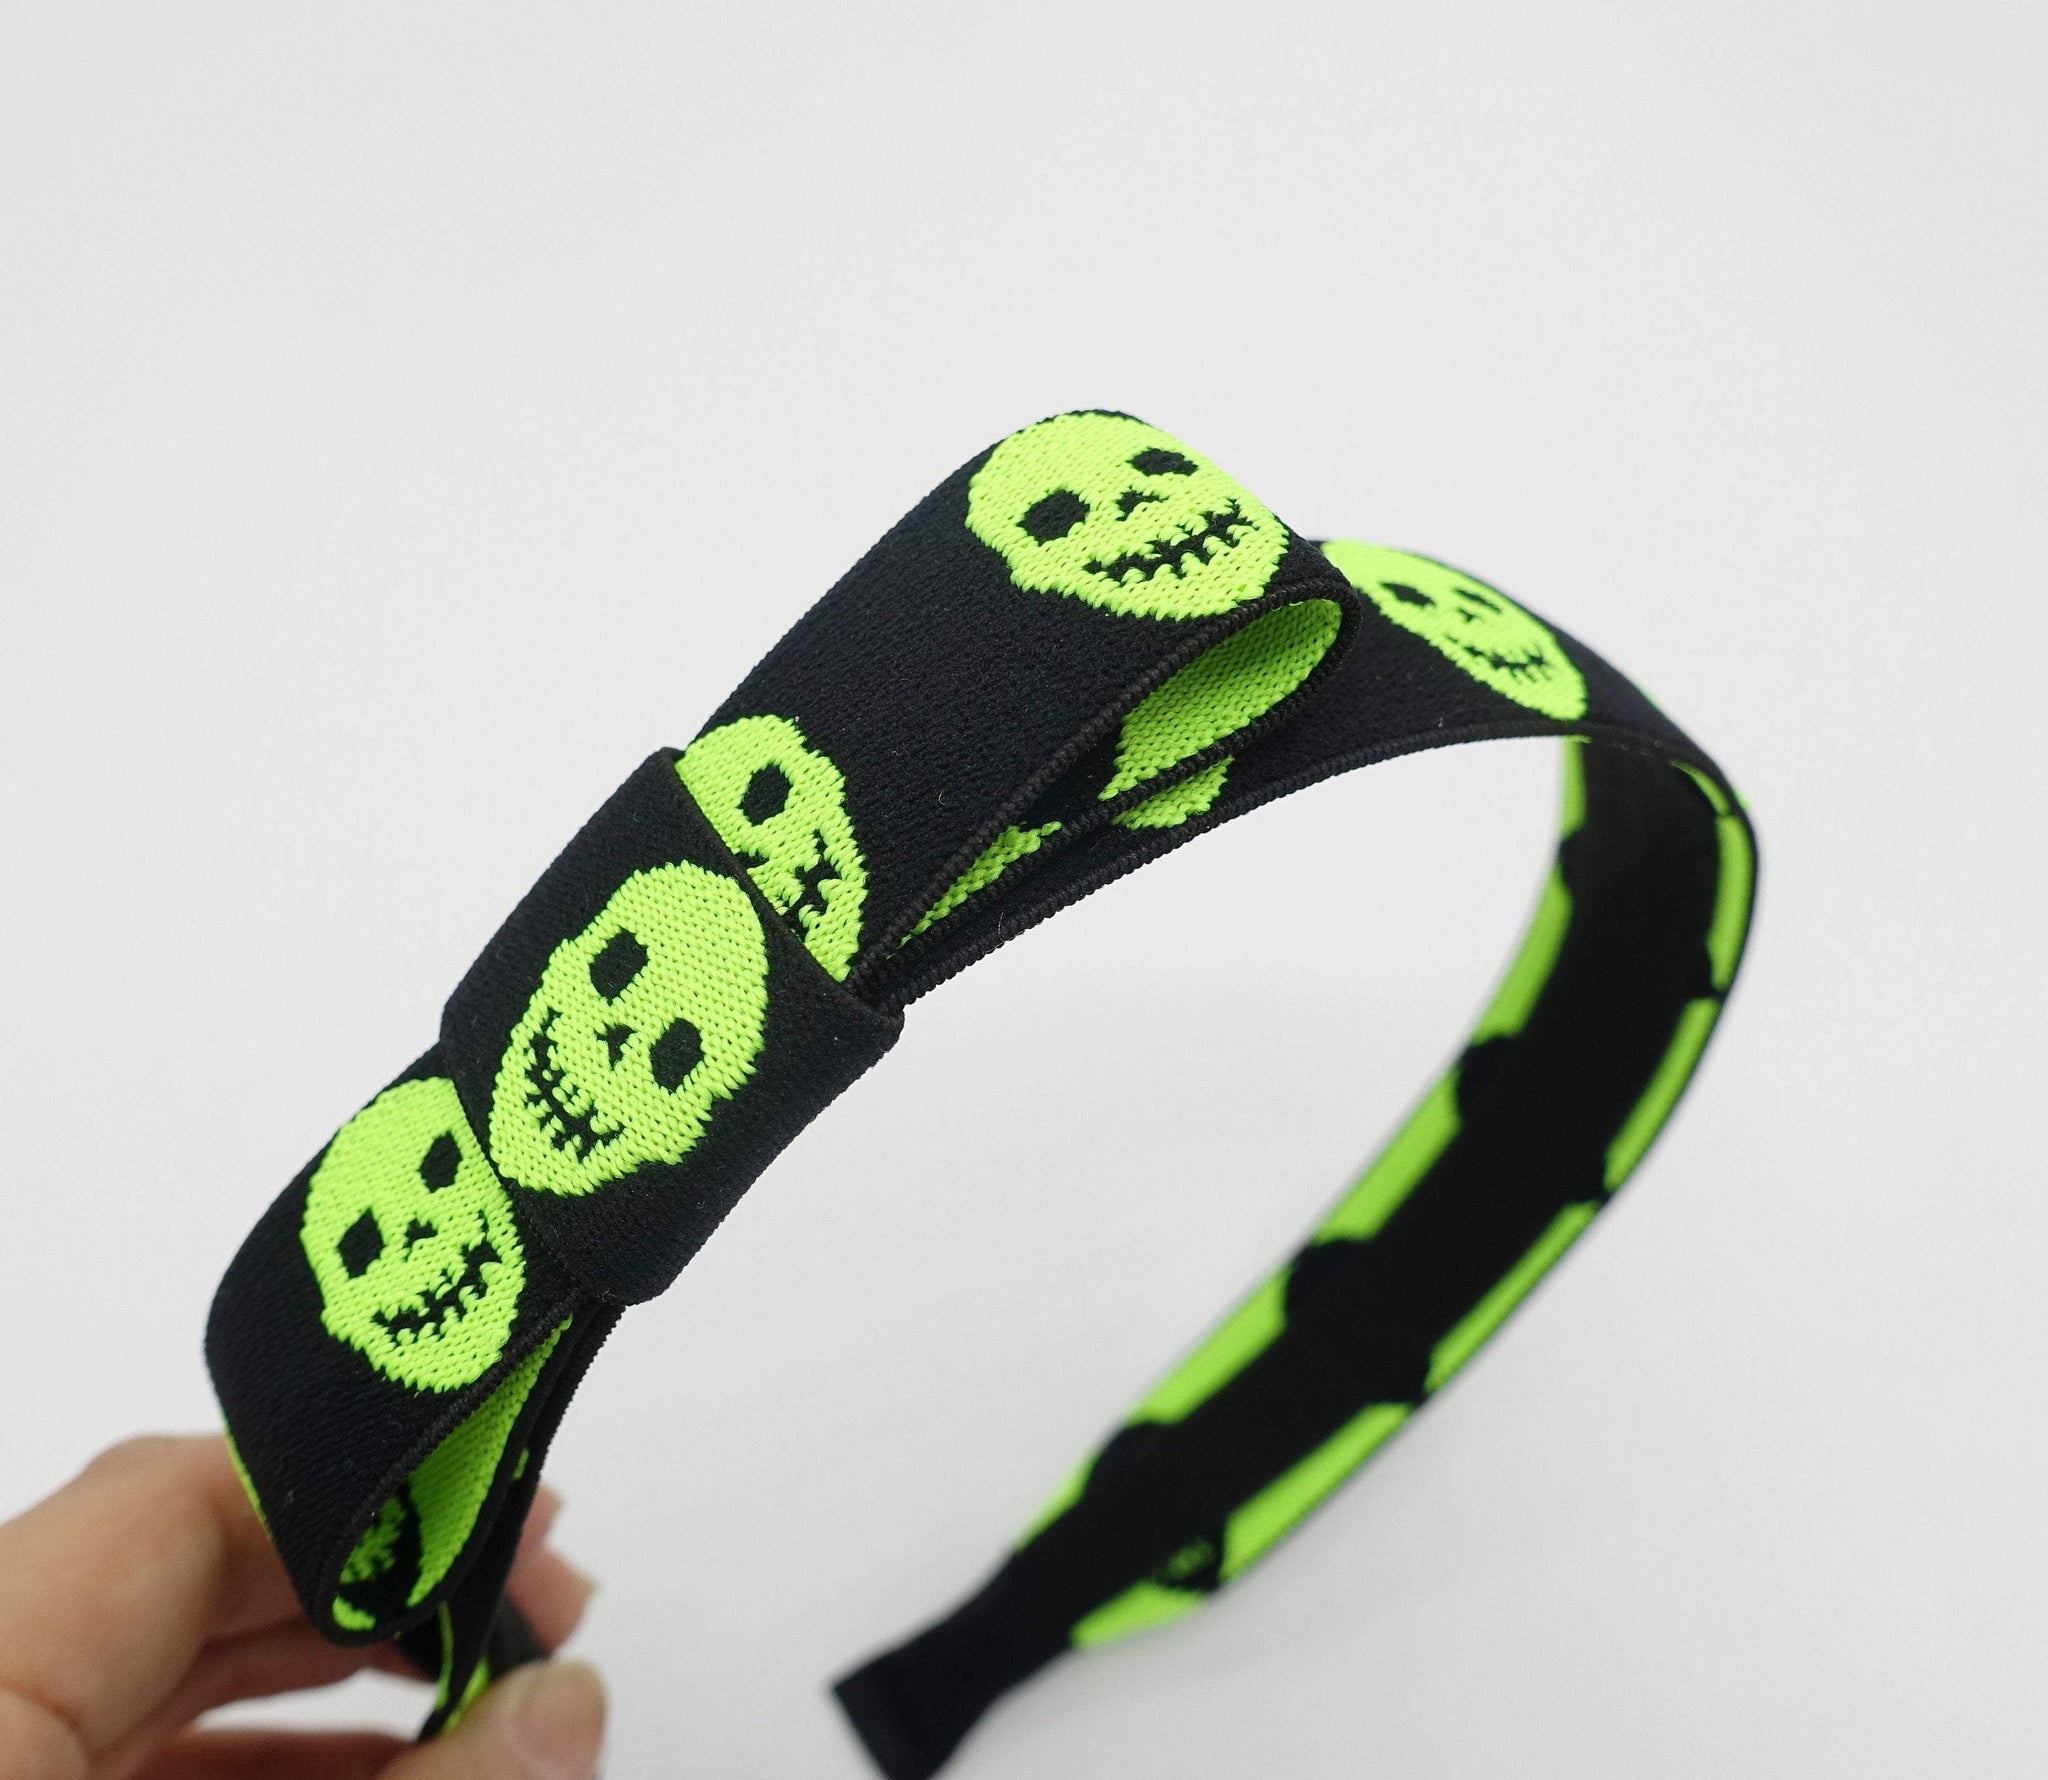 VeryShine Headband neon skull print headband casual hair accessory for women